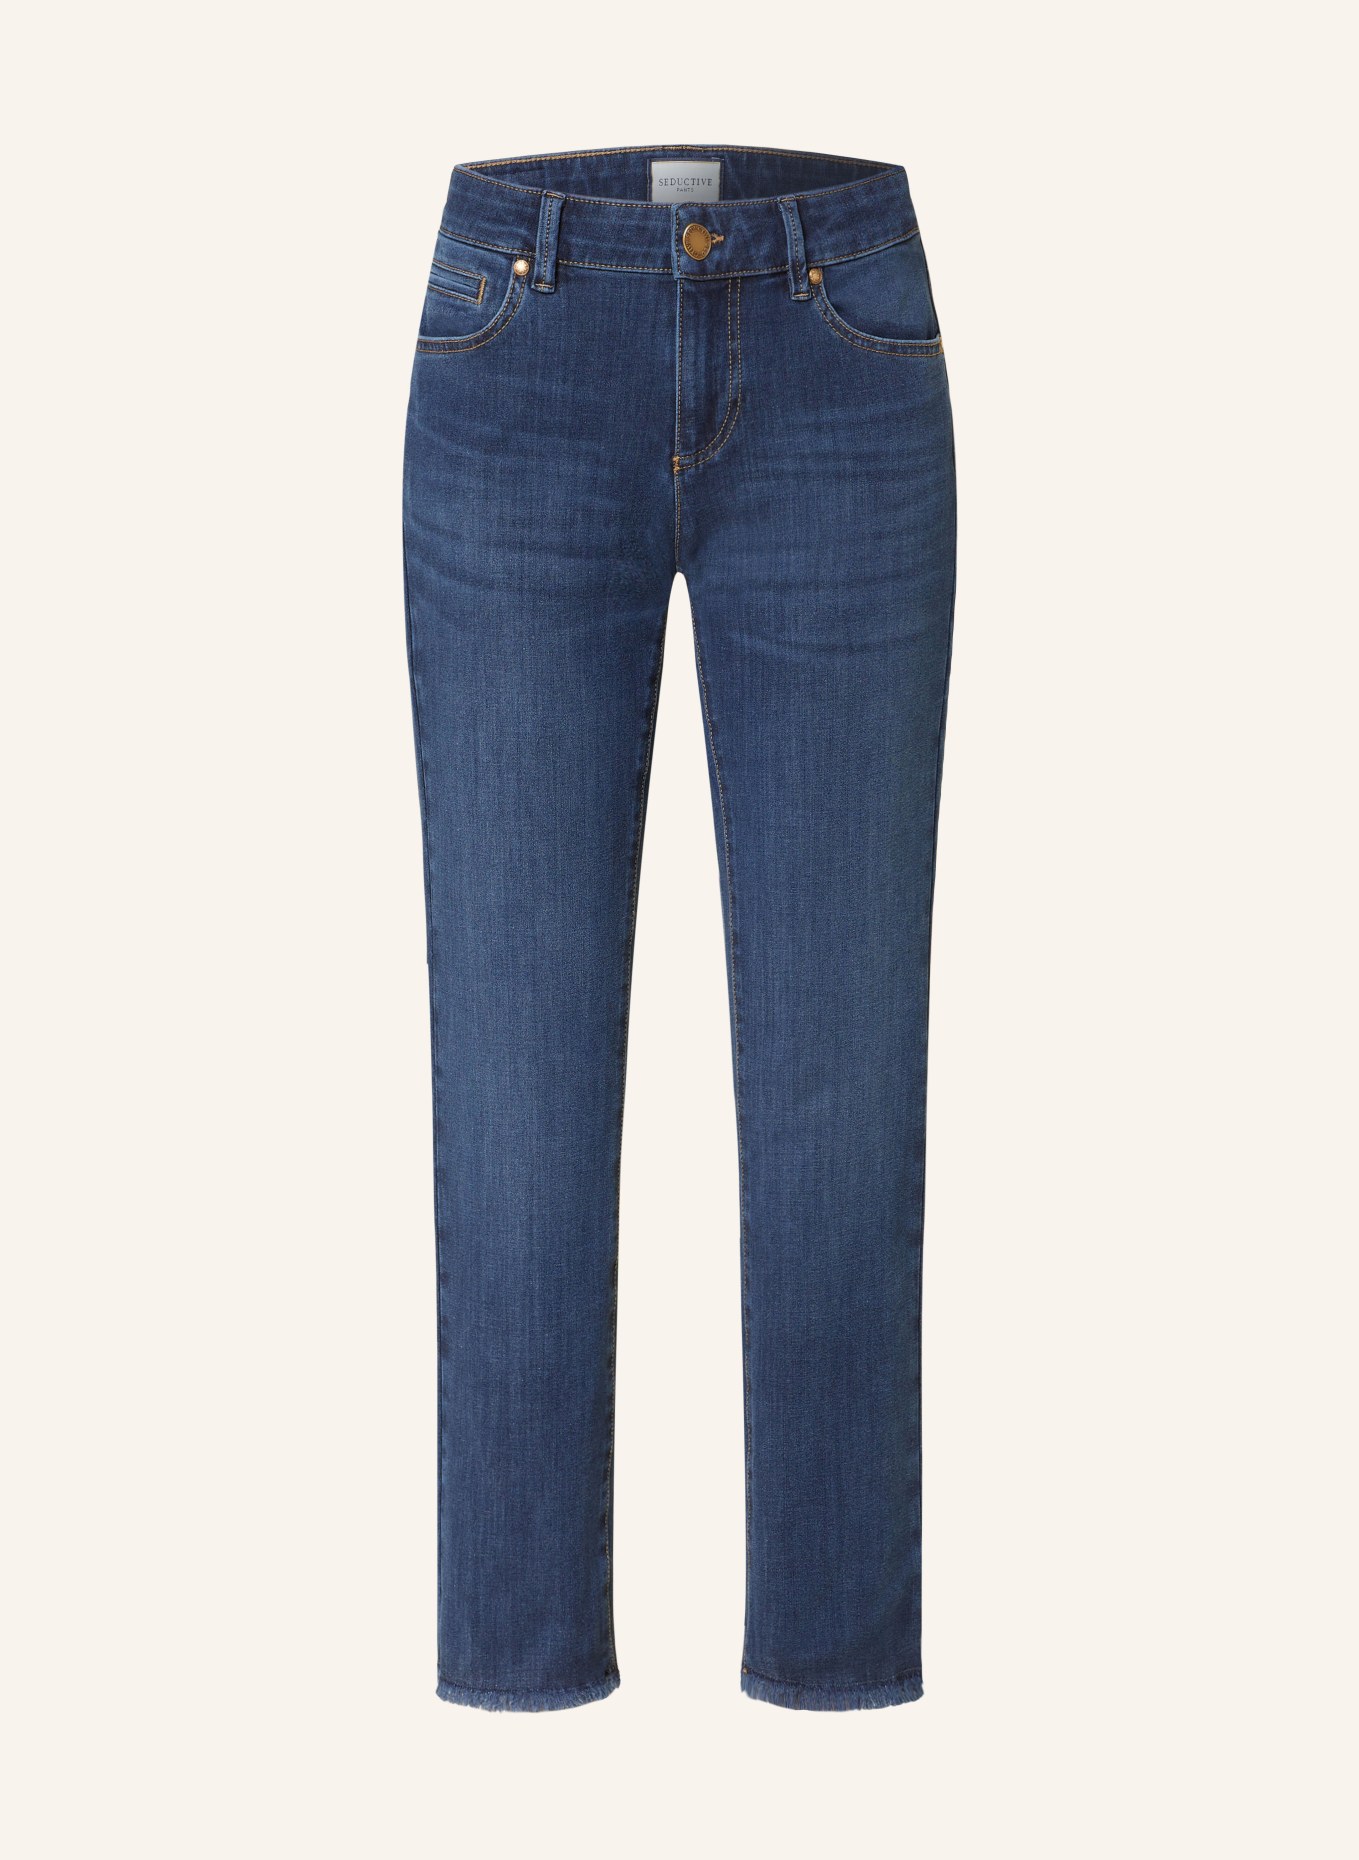 SEDUCTIVE 7/8-Jeans CLAIRE, Farbe: 858 moonlight blue (Bild 1)